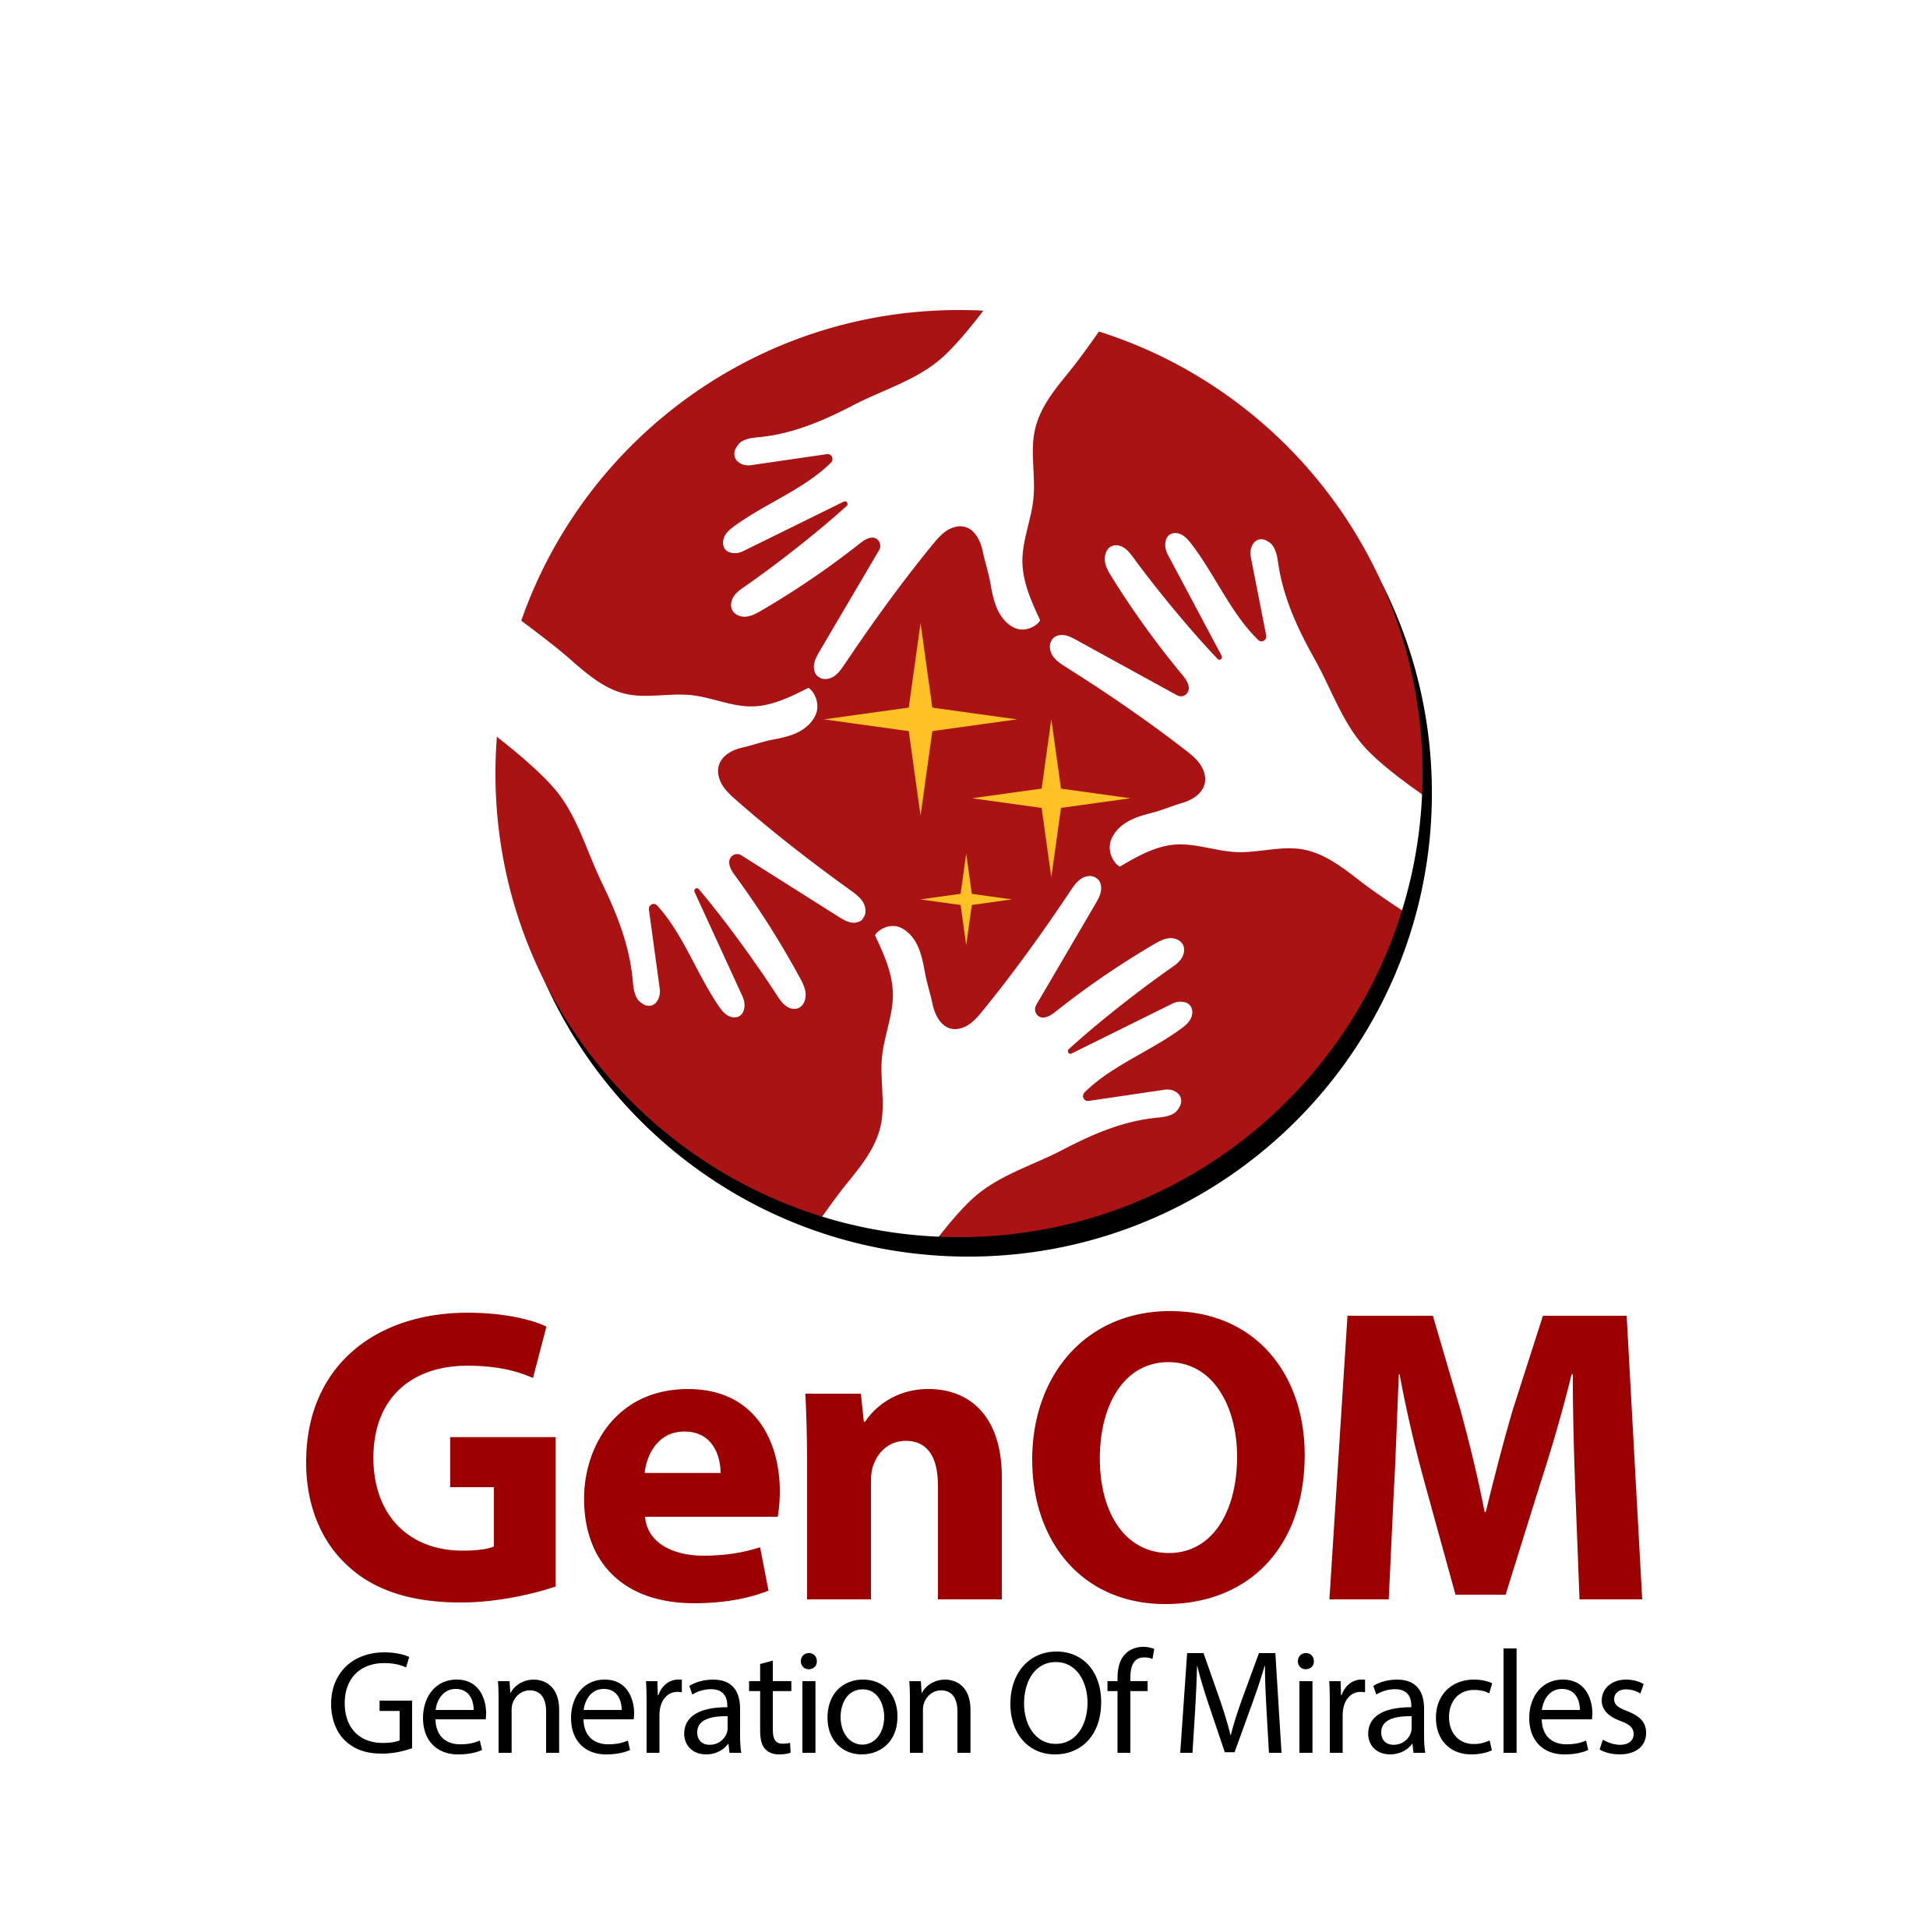 GenOM - Logo 1 copy 2